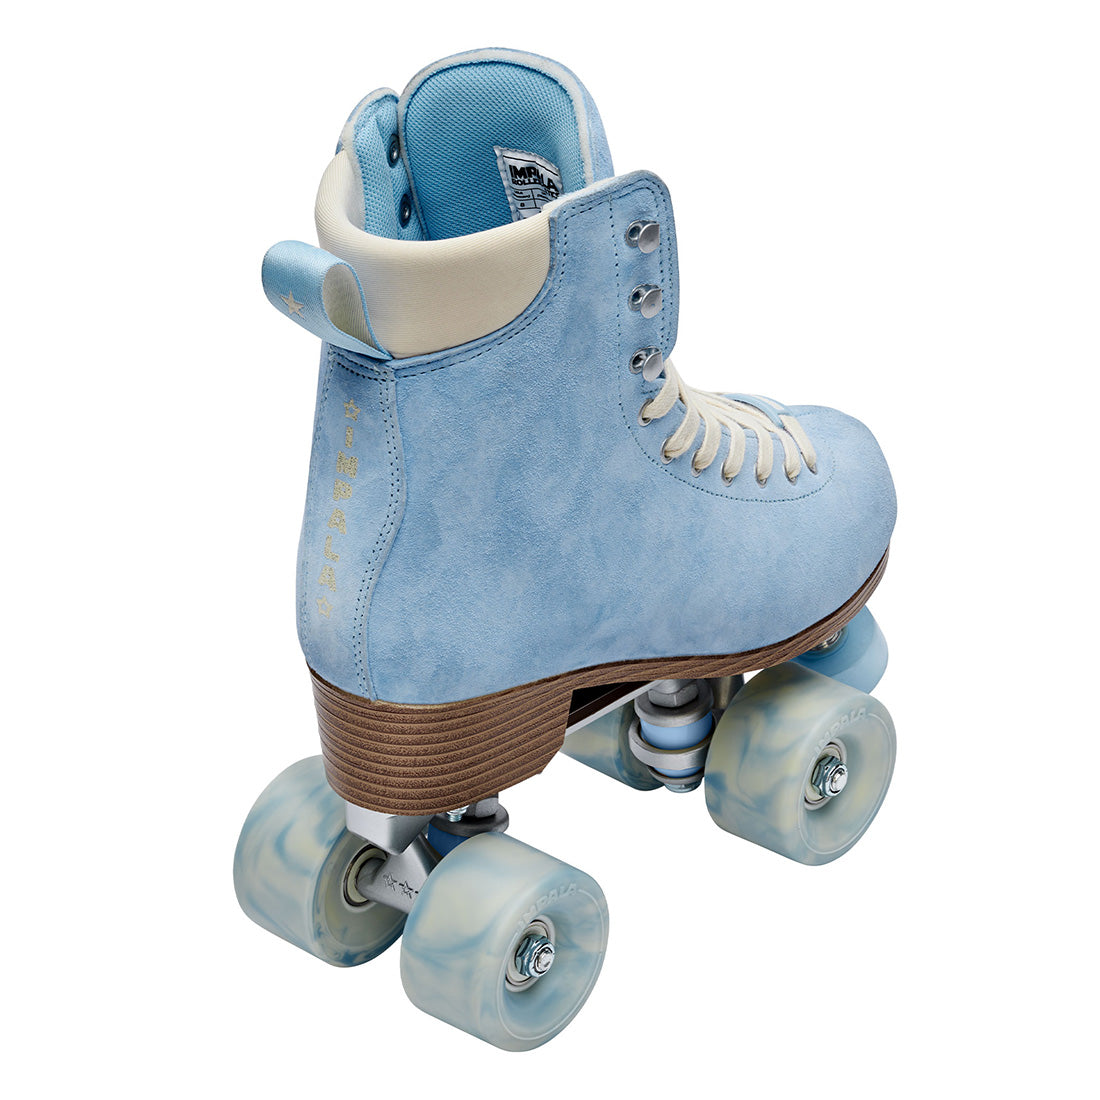 Impala Samira Suede - Dusty Blue Roller Skates